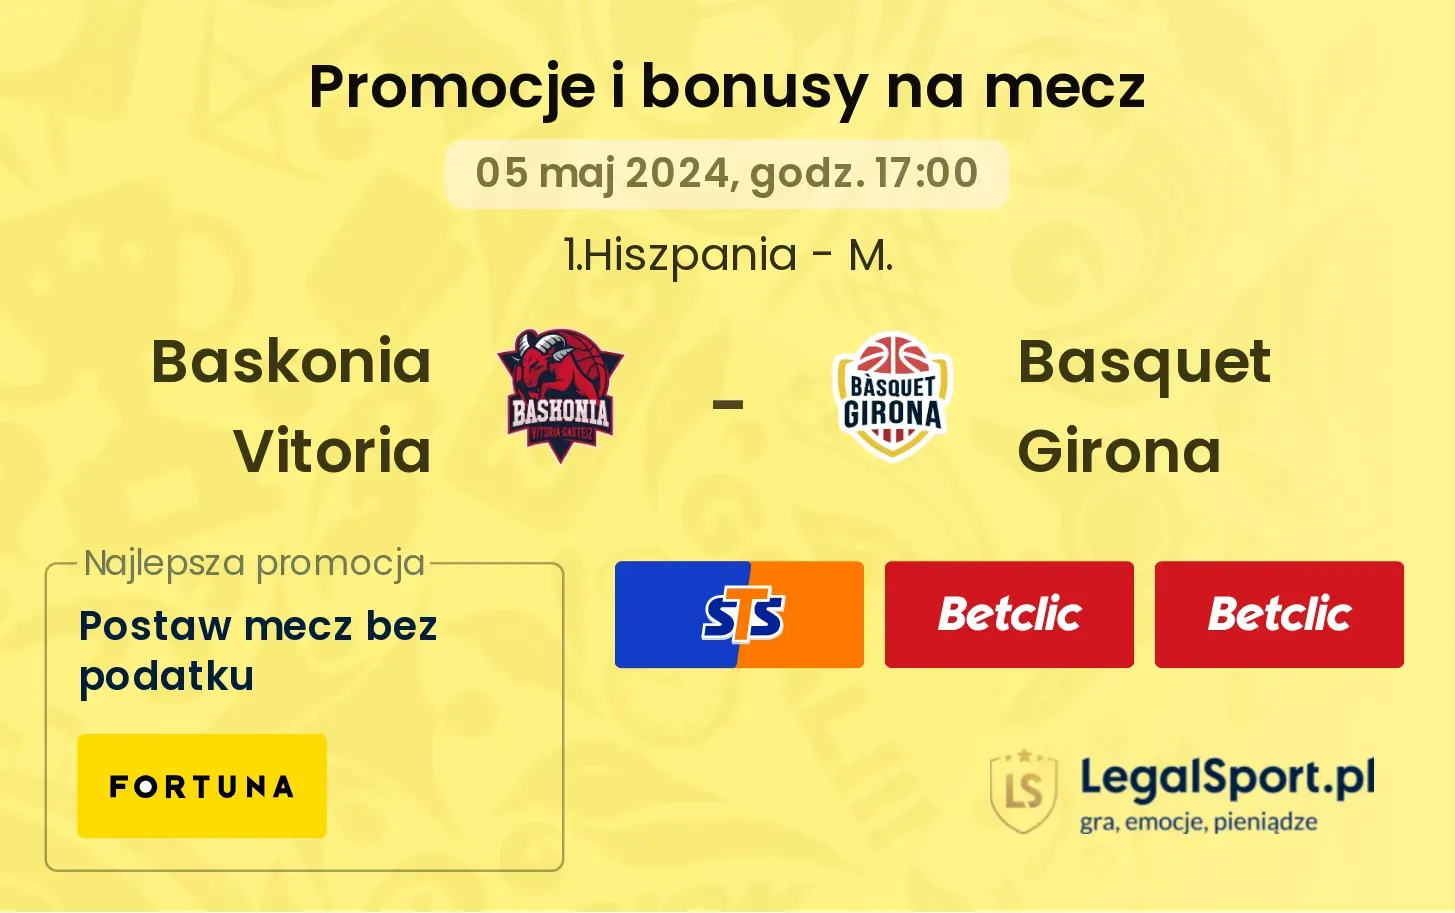 Baskonia Vitoria - Basquet Girona promocje bonusy na mecz